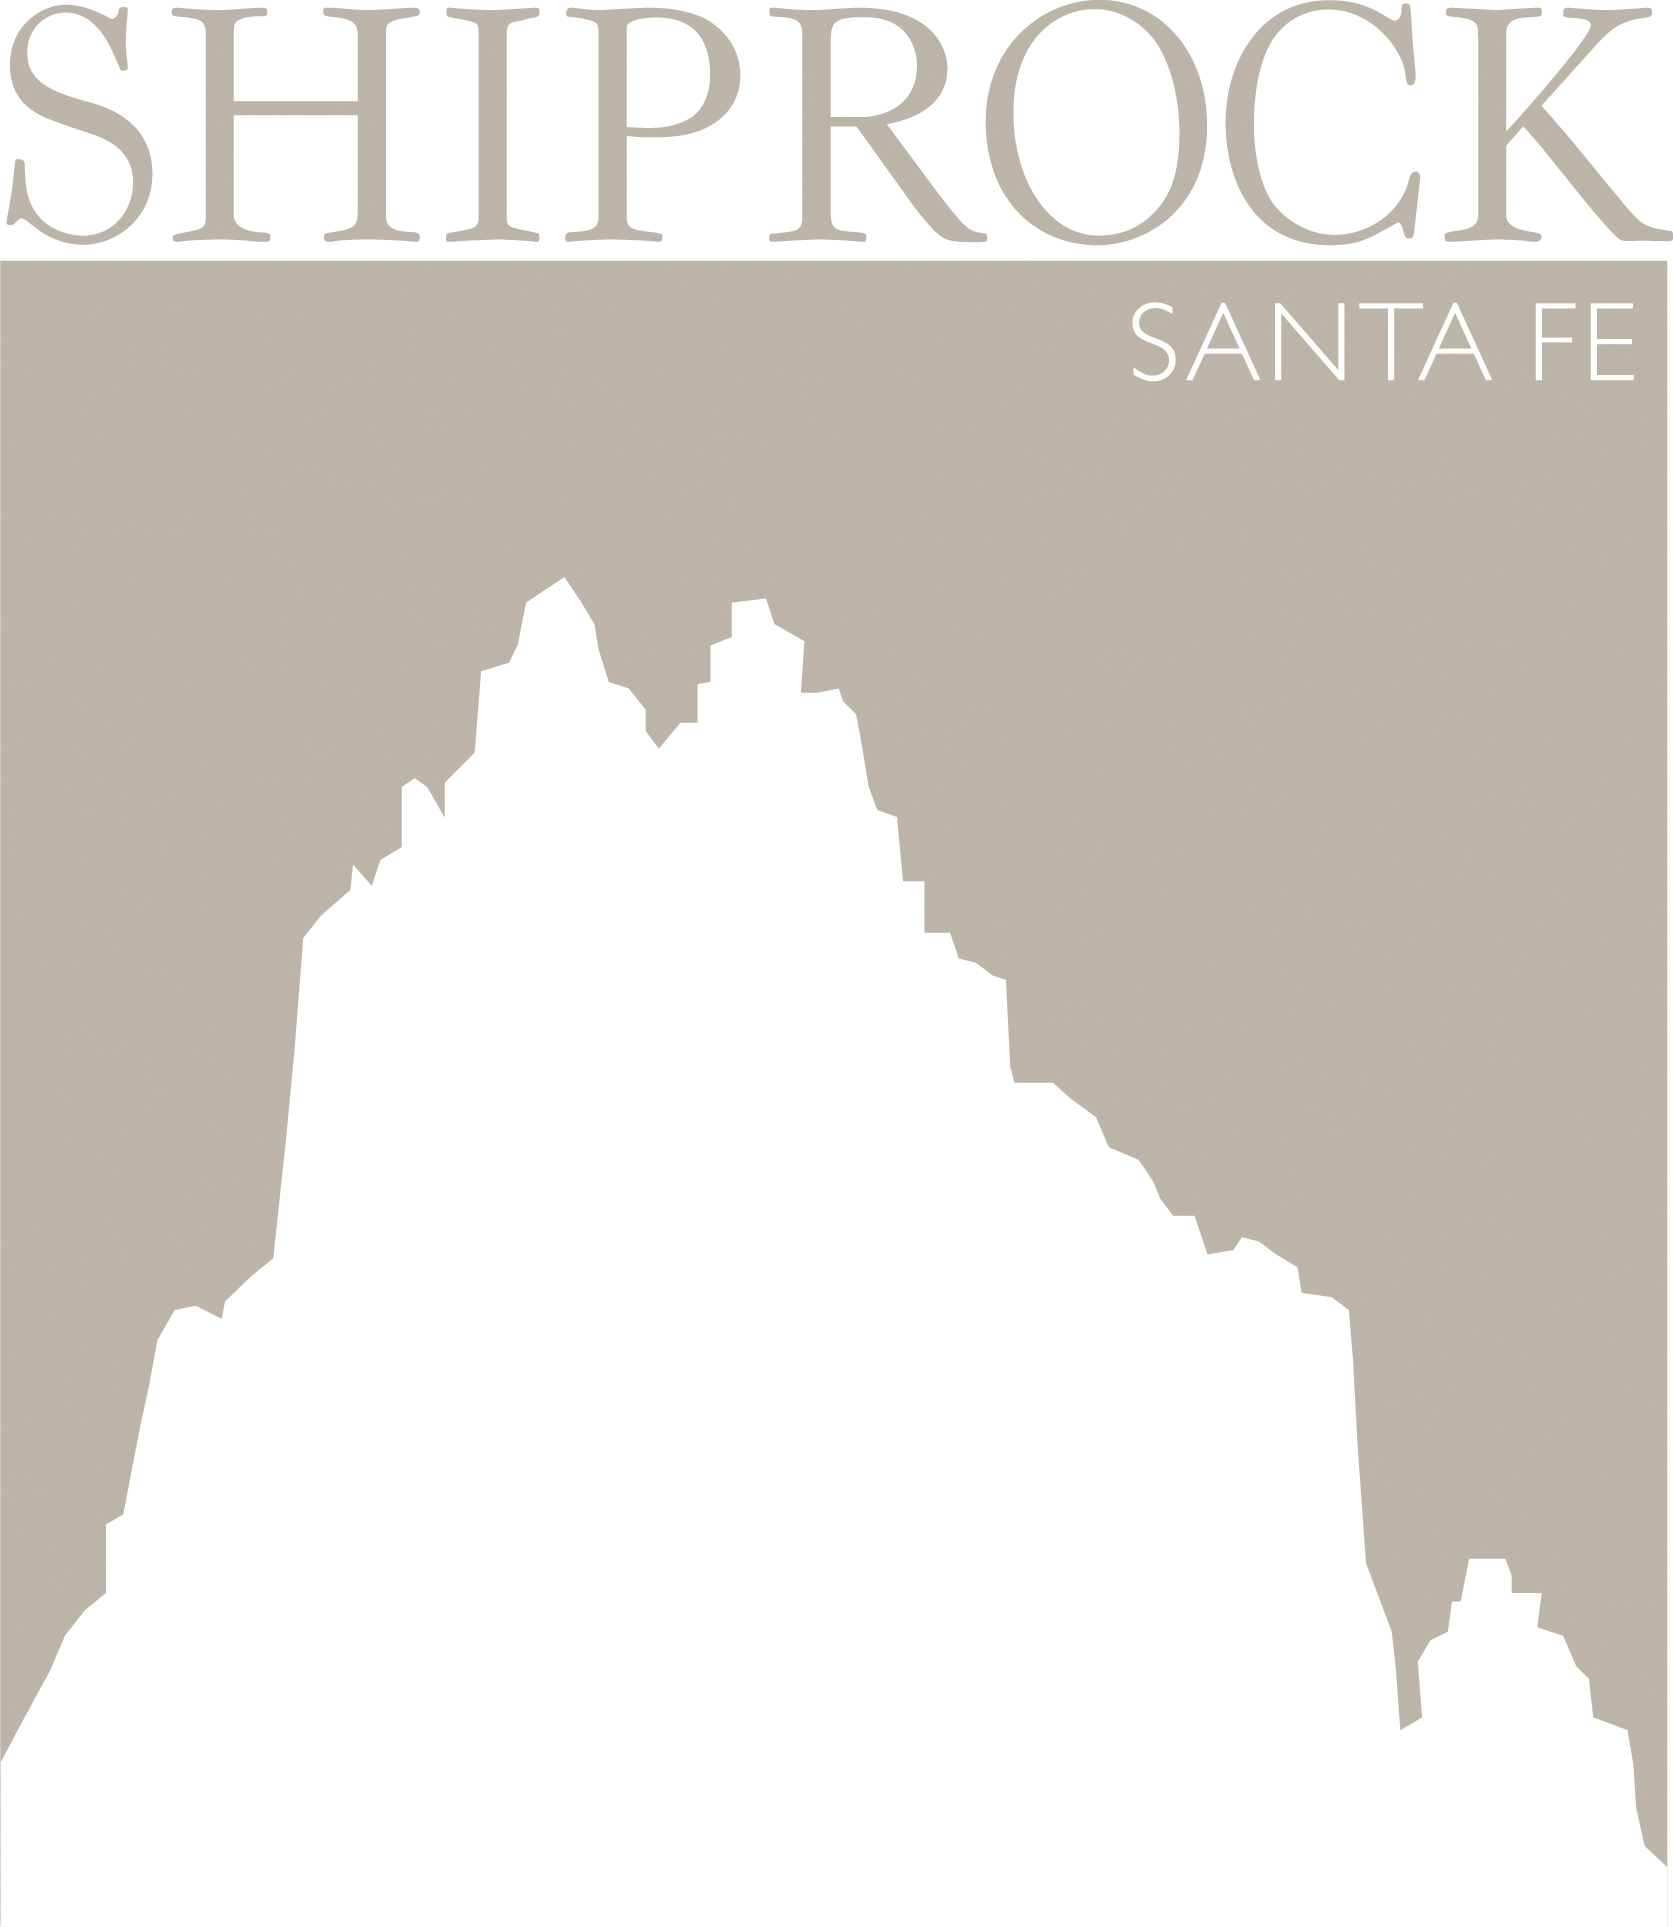 Shiprock Santa Fe logo